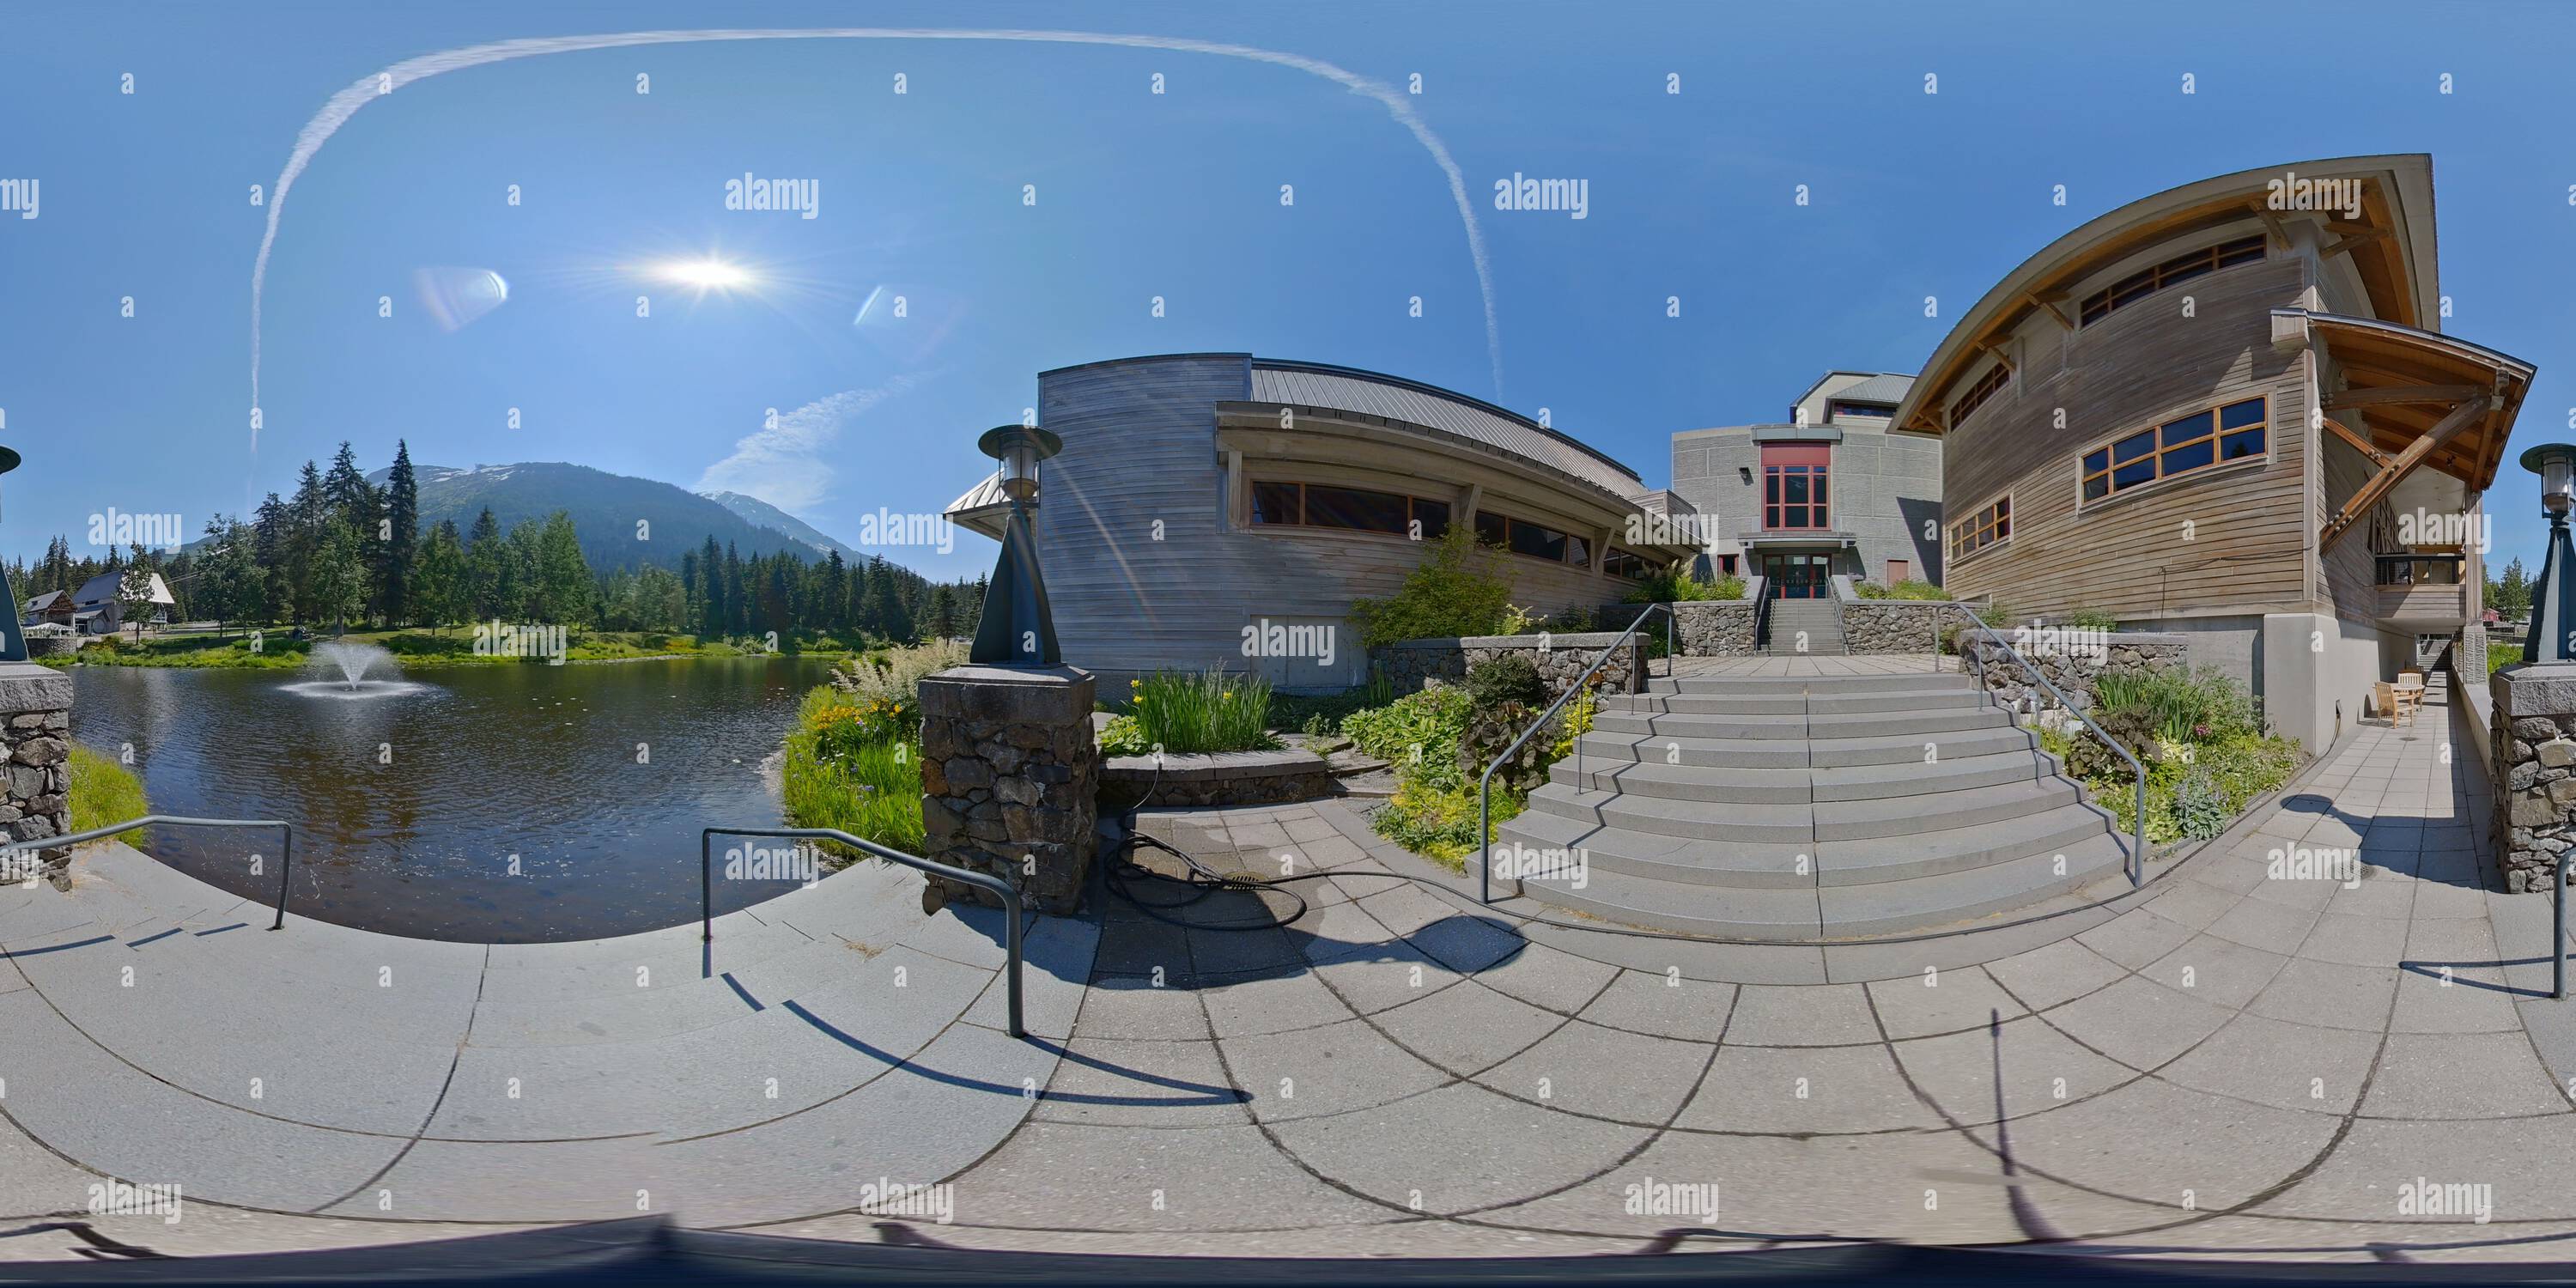 360 degree panoramic view of Alyeska Resort, Girdwood, Alaska Summer 2022